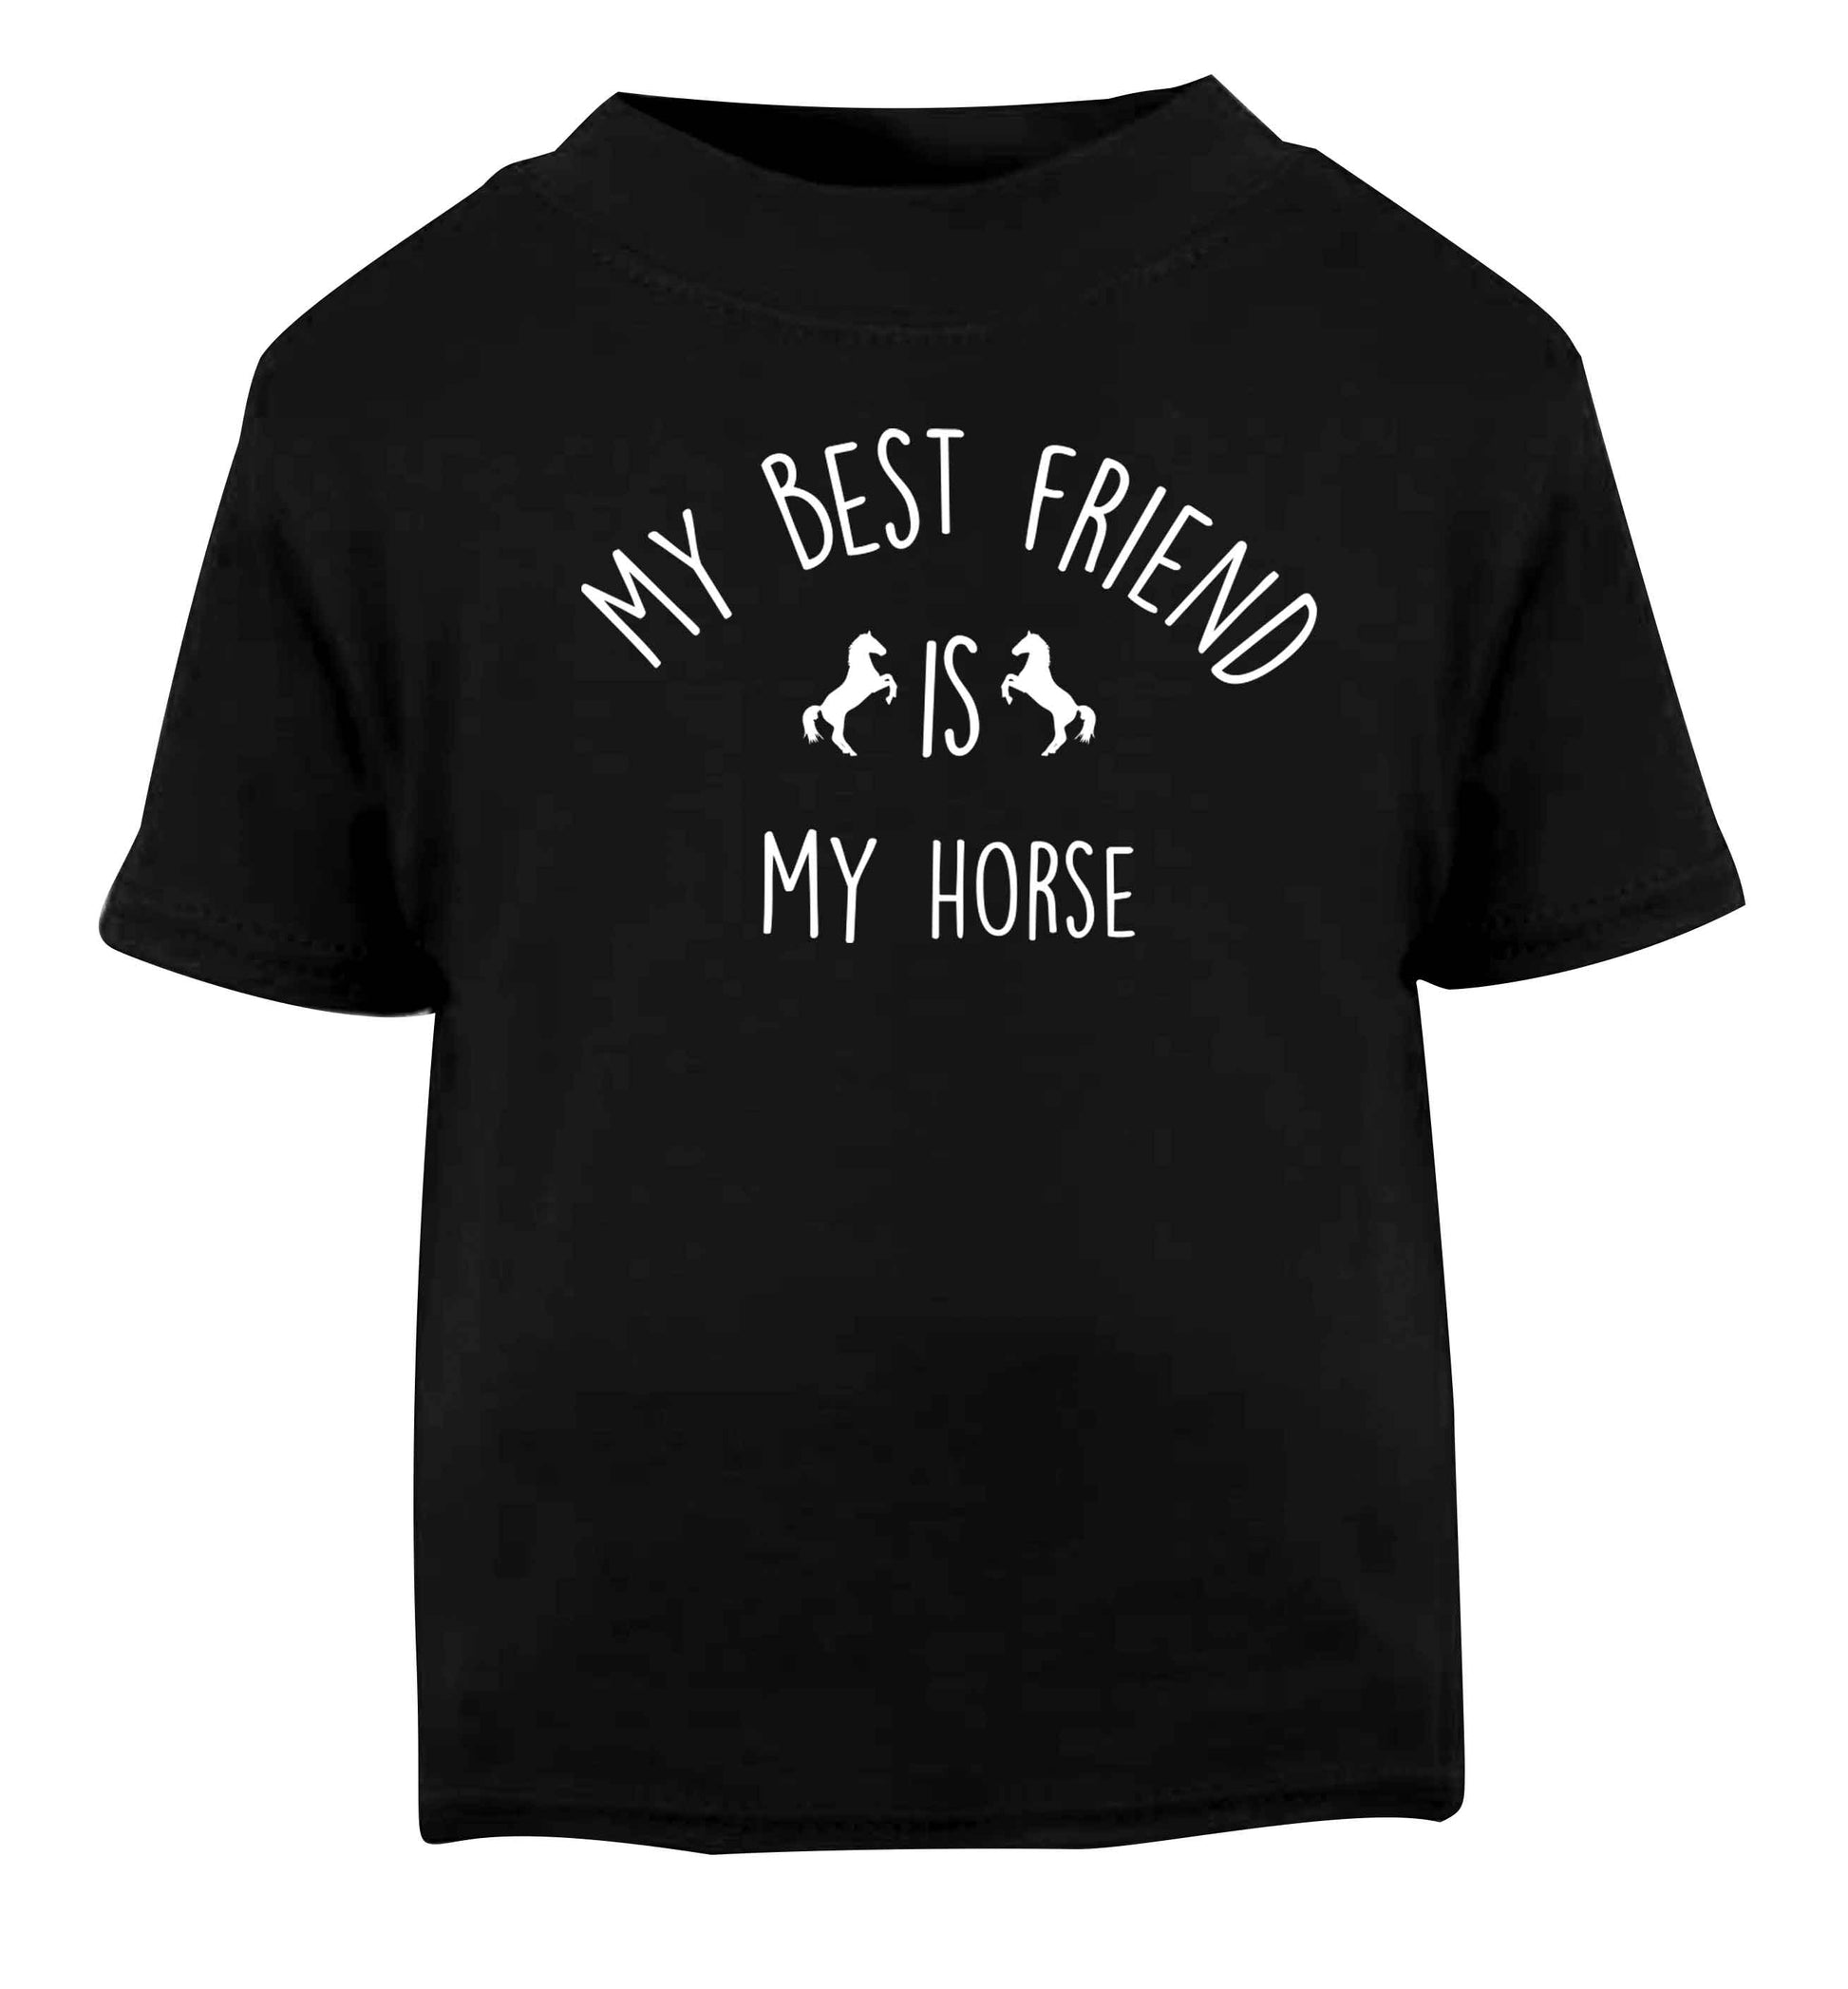 My best friend is my horse Black baby toddler Tshirt 2 years